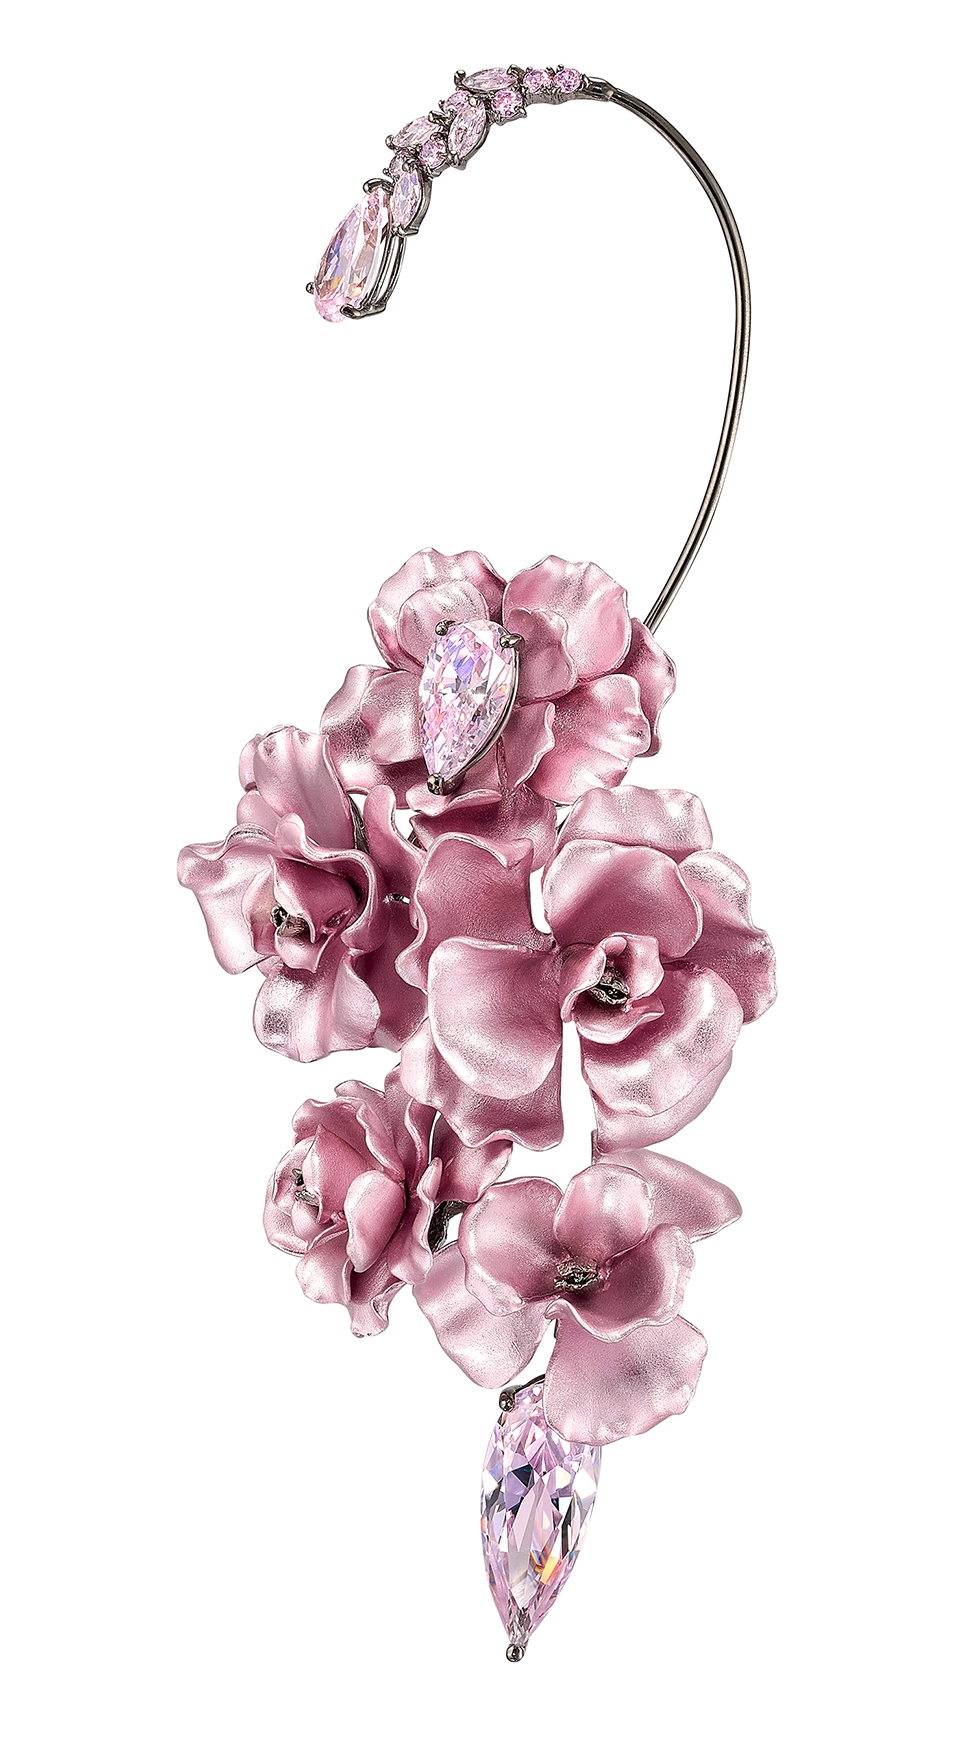 11 Dazzling Flower Jewellery Pieces For Springtime